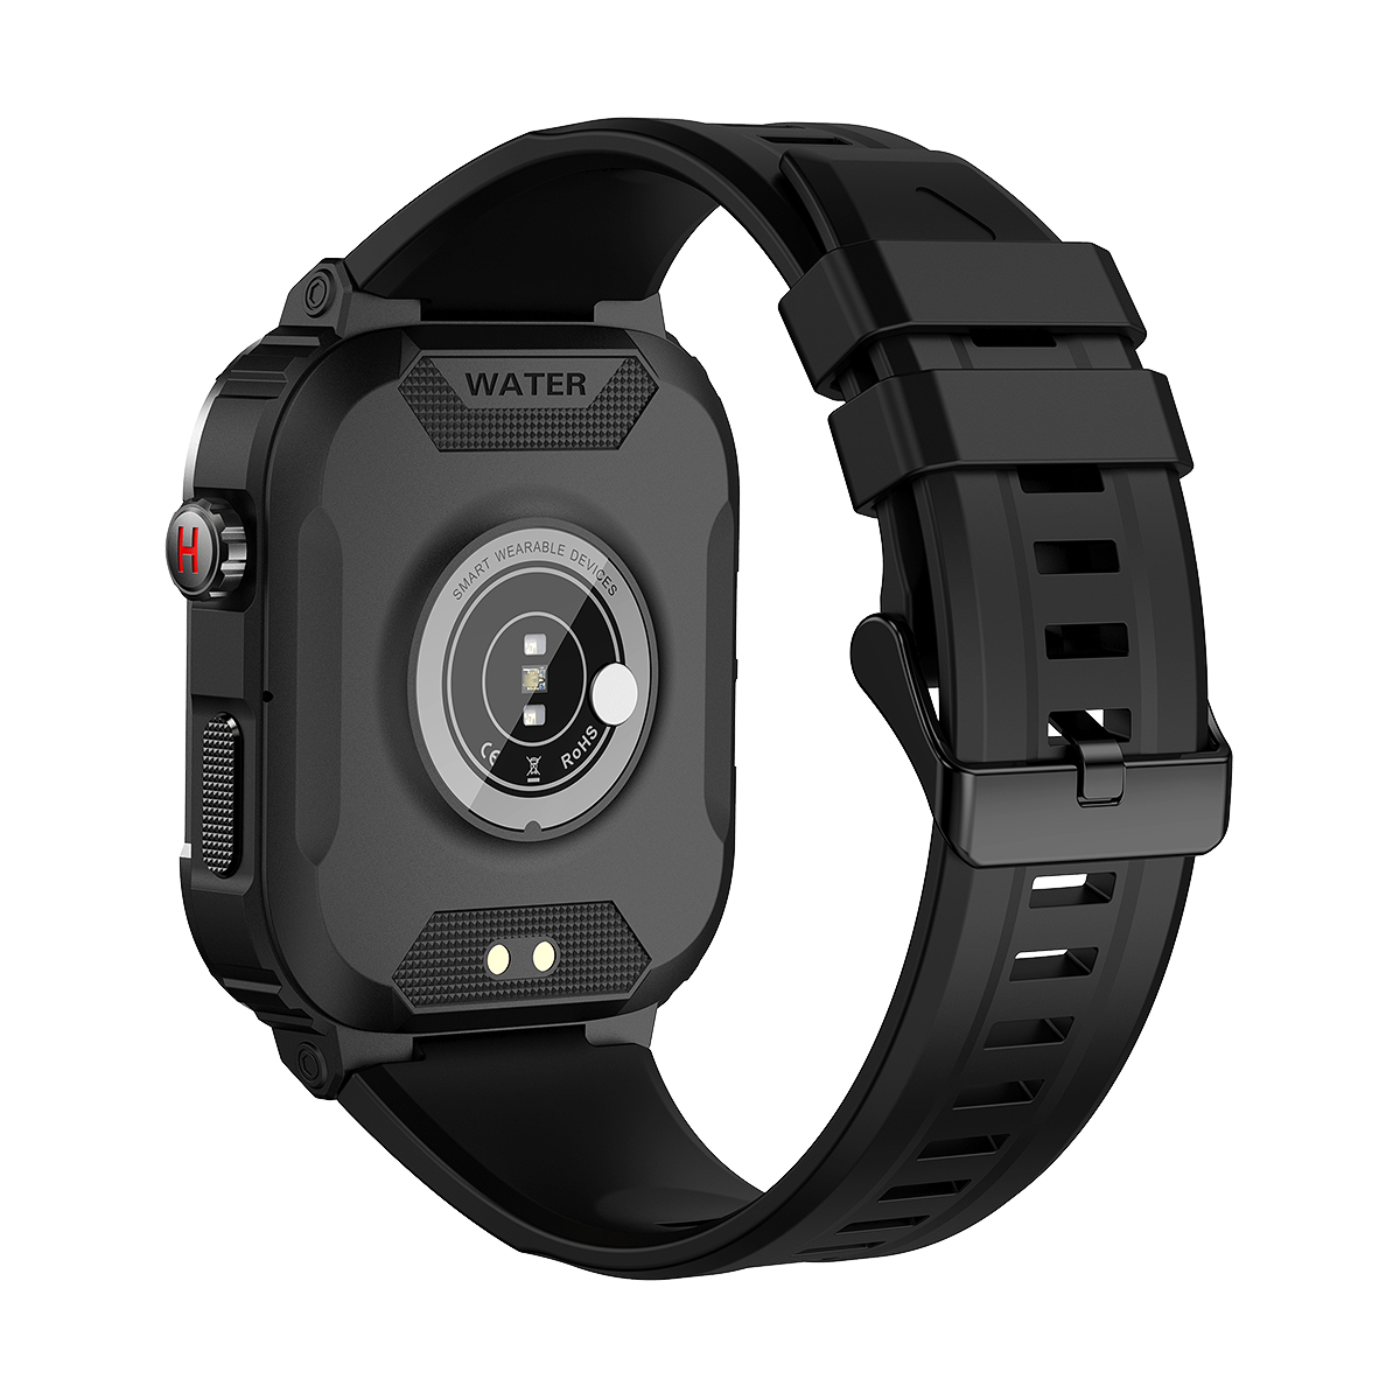 Gard Pro Ultra smartwatch